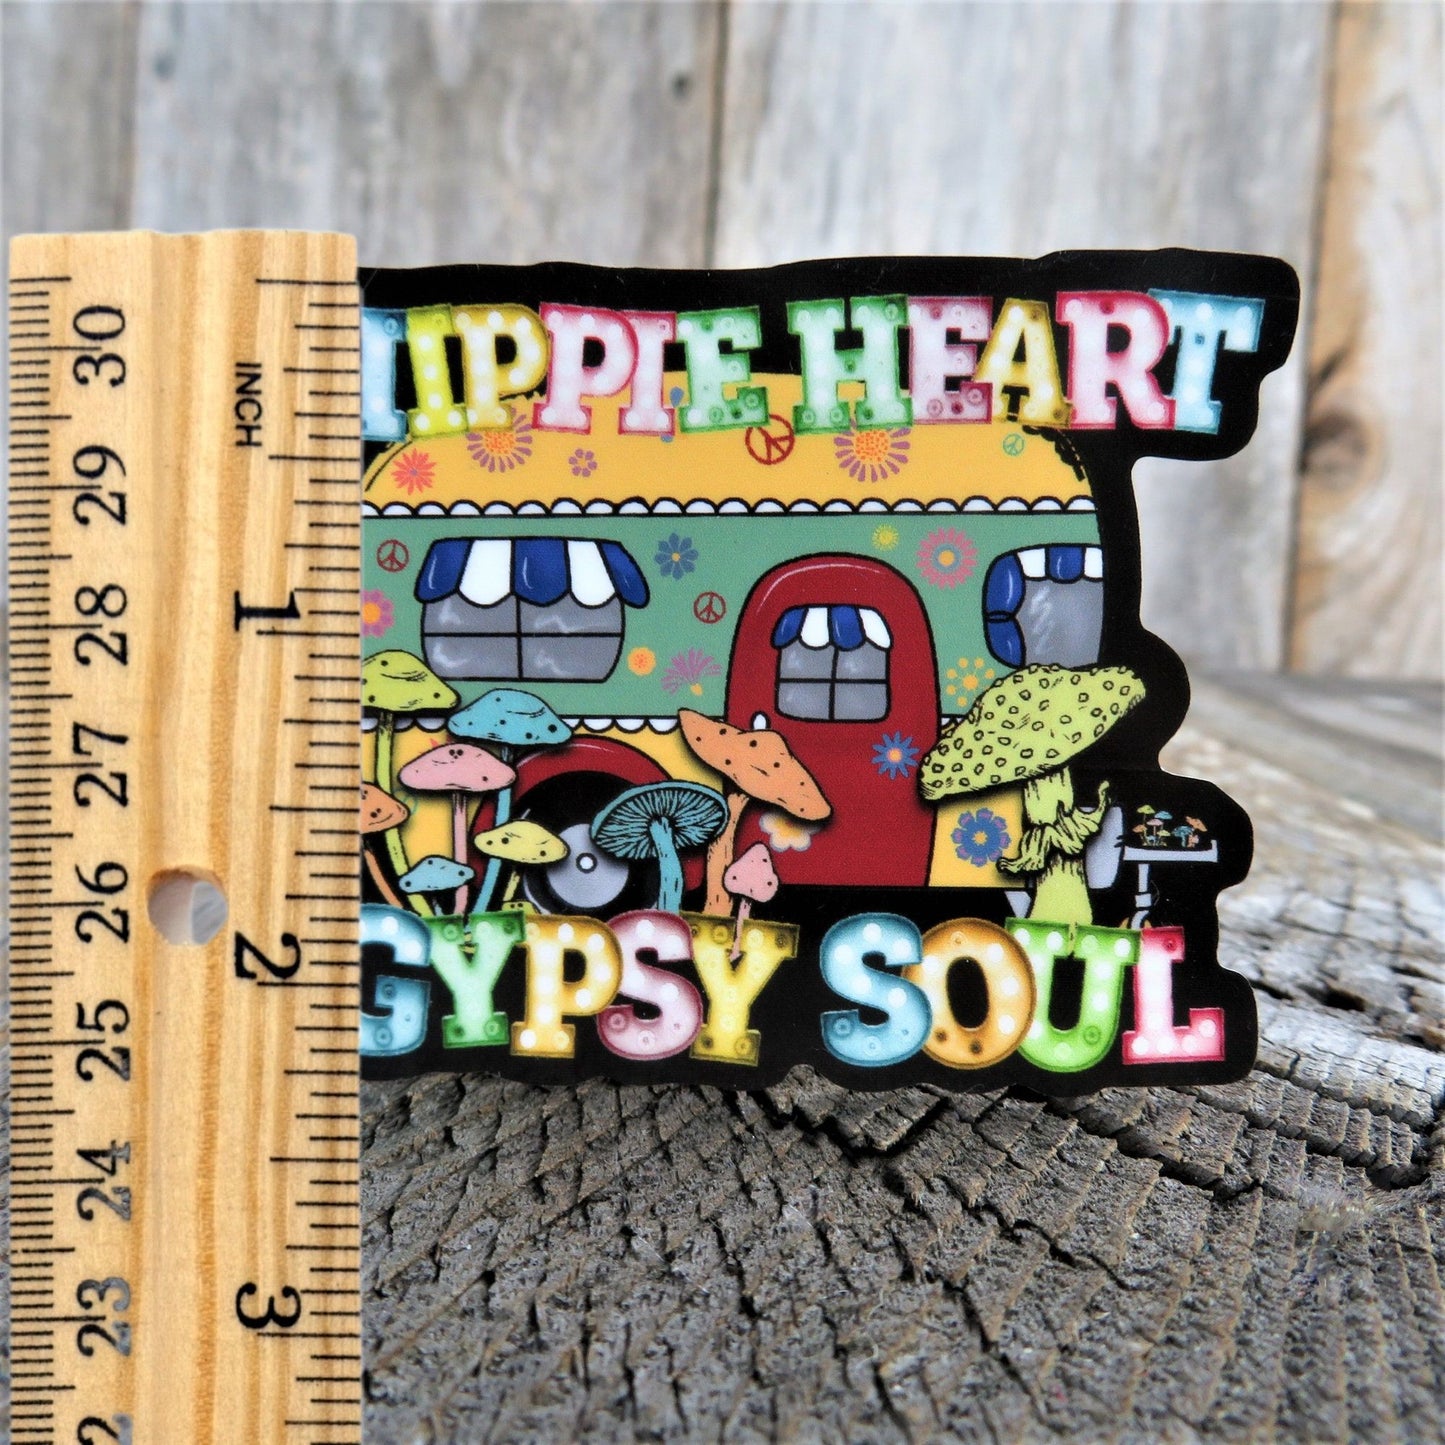 Travel Trailer Hippie Heart Gypsy Soul Sticker Bright Colored Mushrooms Decal Waterproof Car Water Bottle Laptop